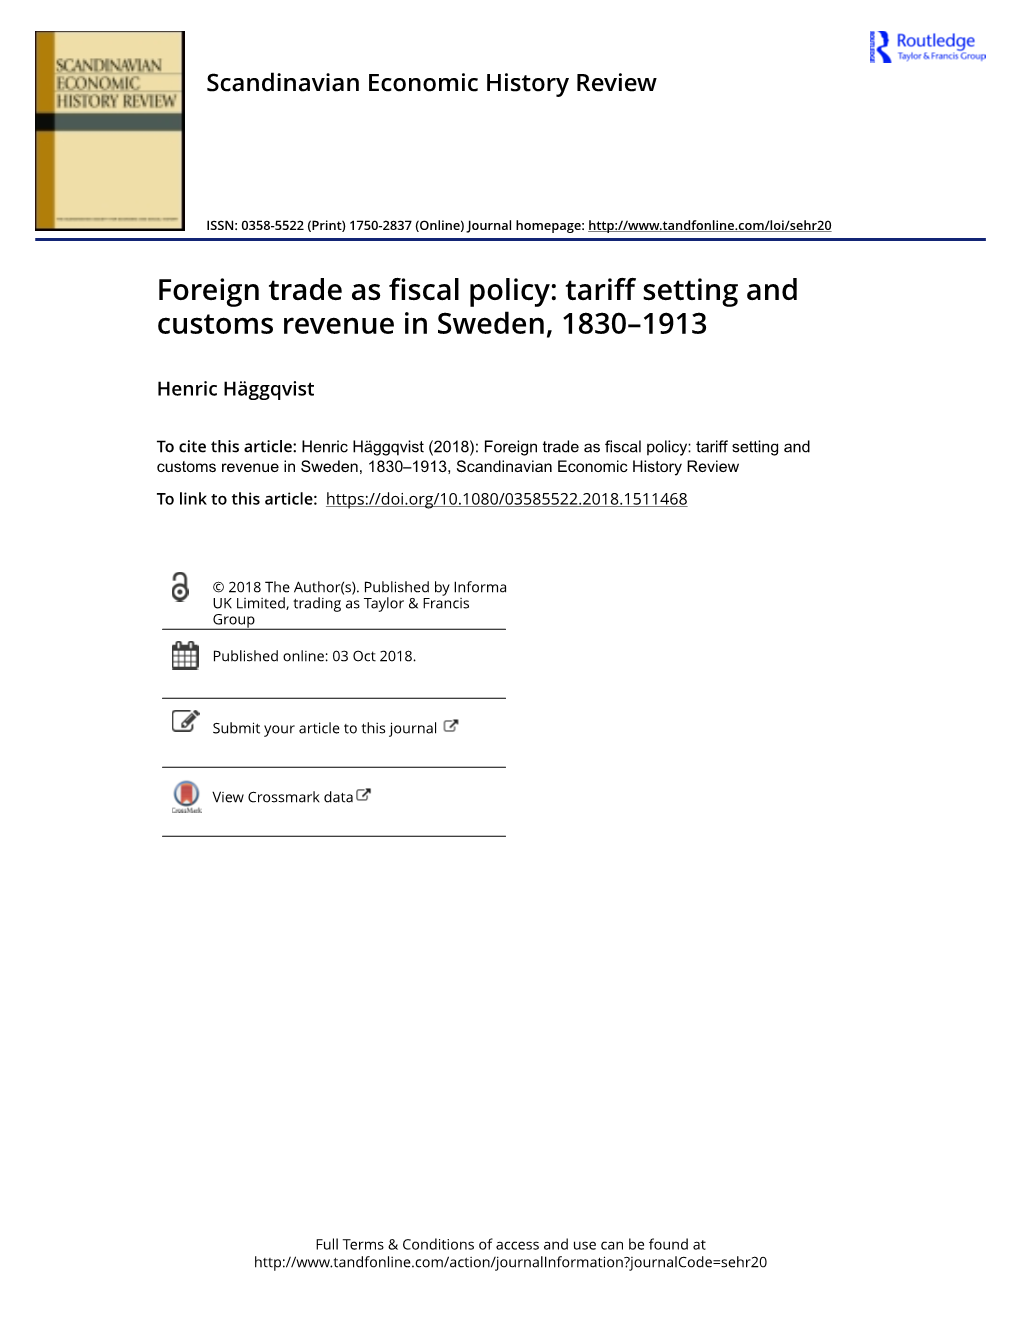 Tariff Setting and Customs Revenue in Sweden, 1830–1913